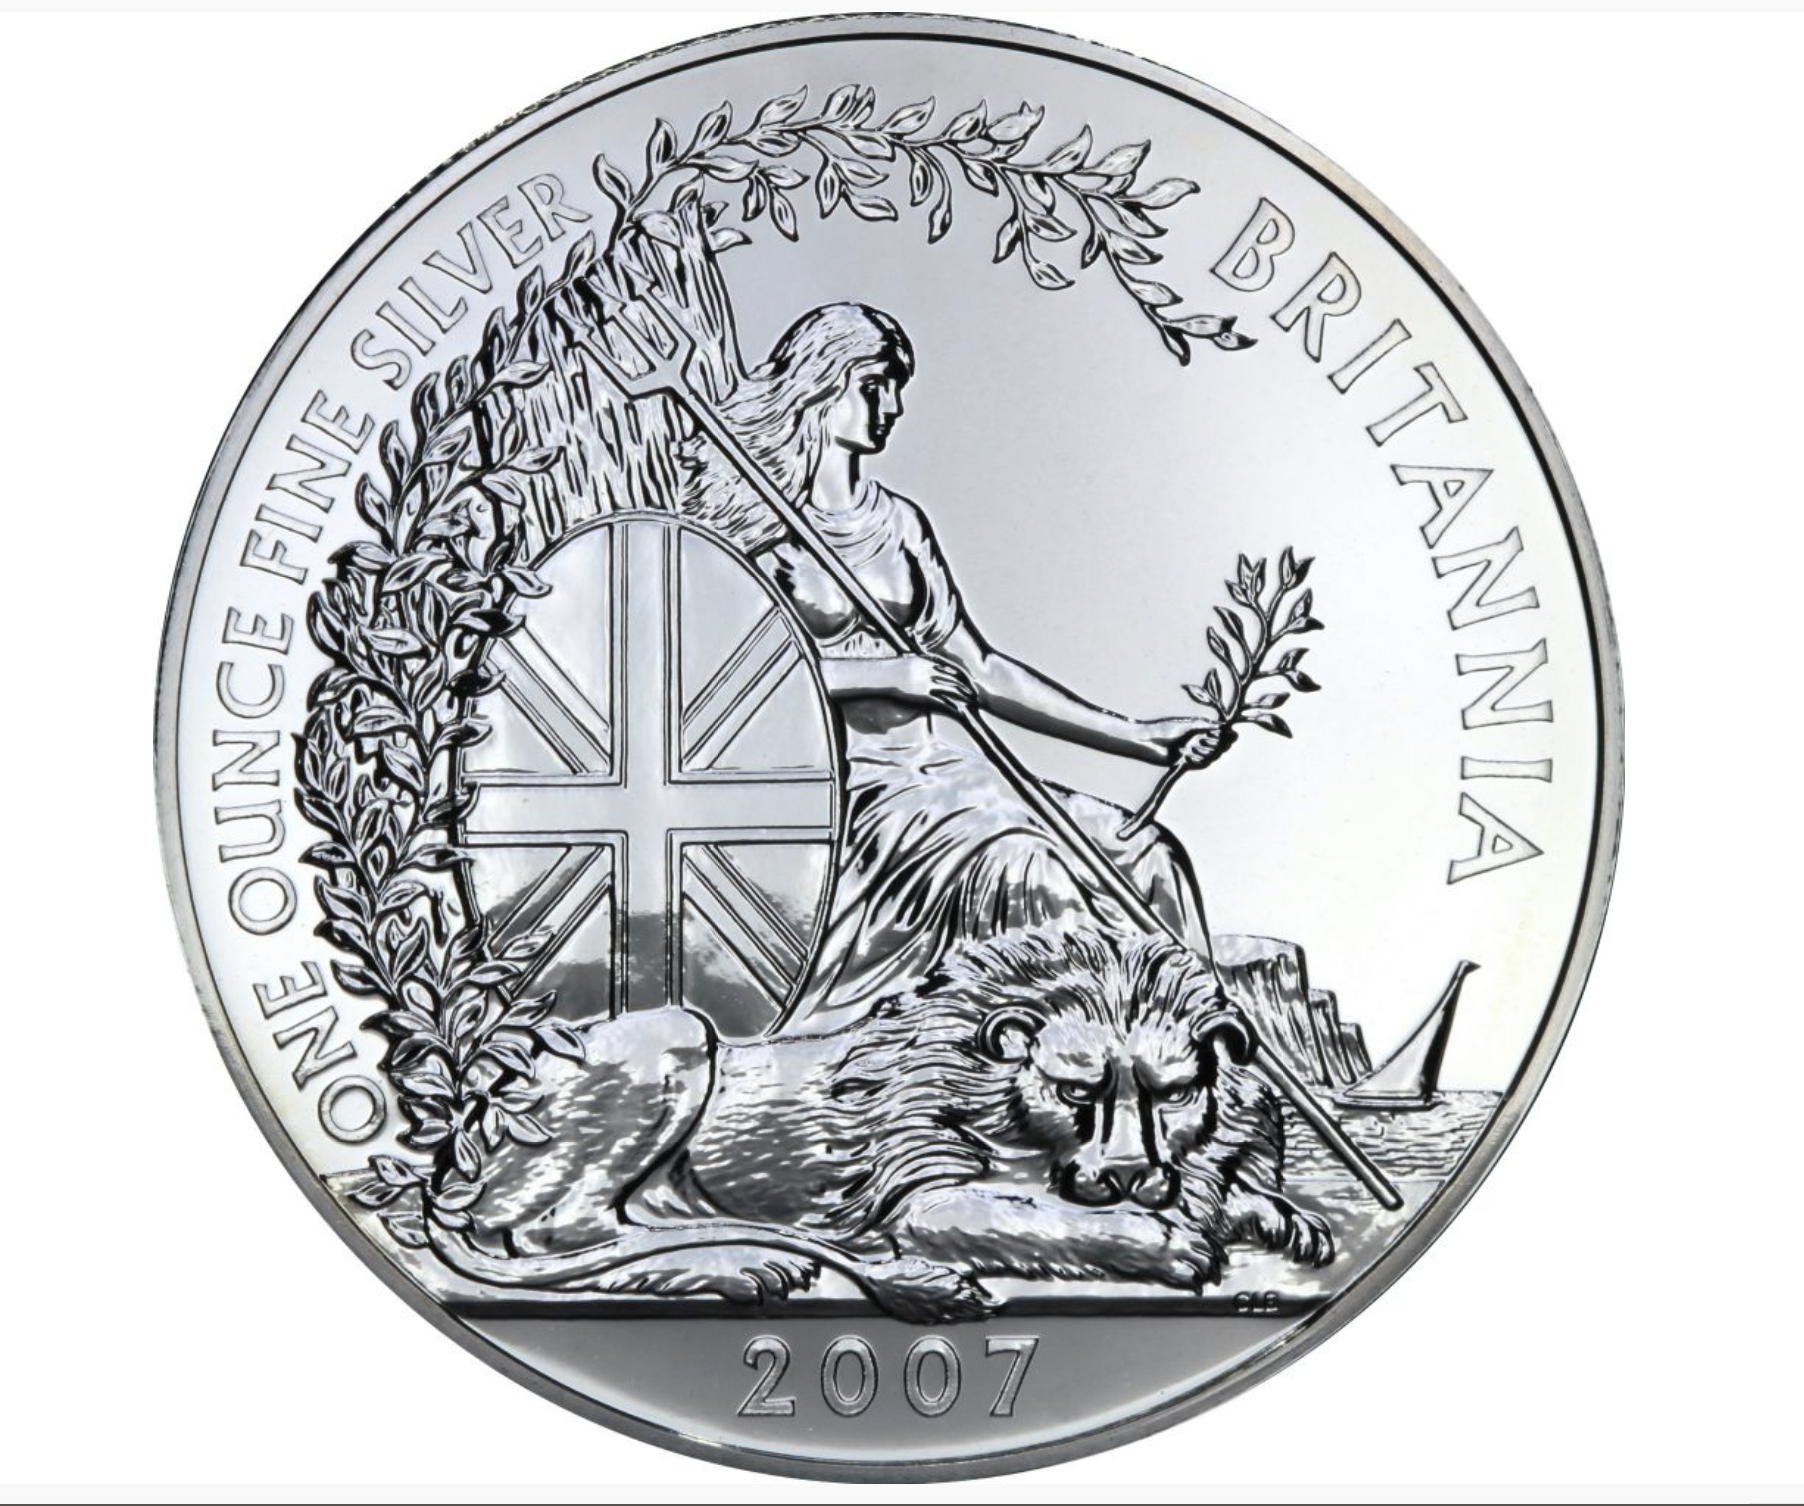 Серебряные монеты англии. 2 Фунта стерлингов монета. Монета 2 фунта Великобритания. Серебряные монеты Британии. Британия на монетах Великобритании.